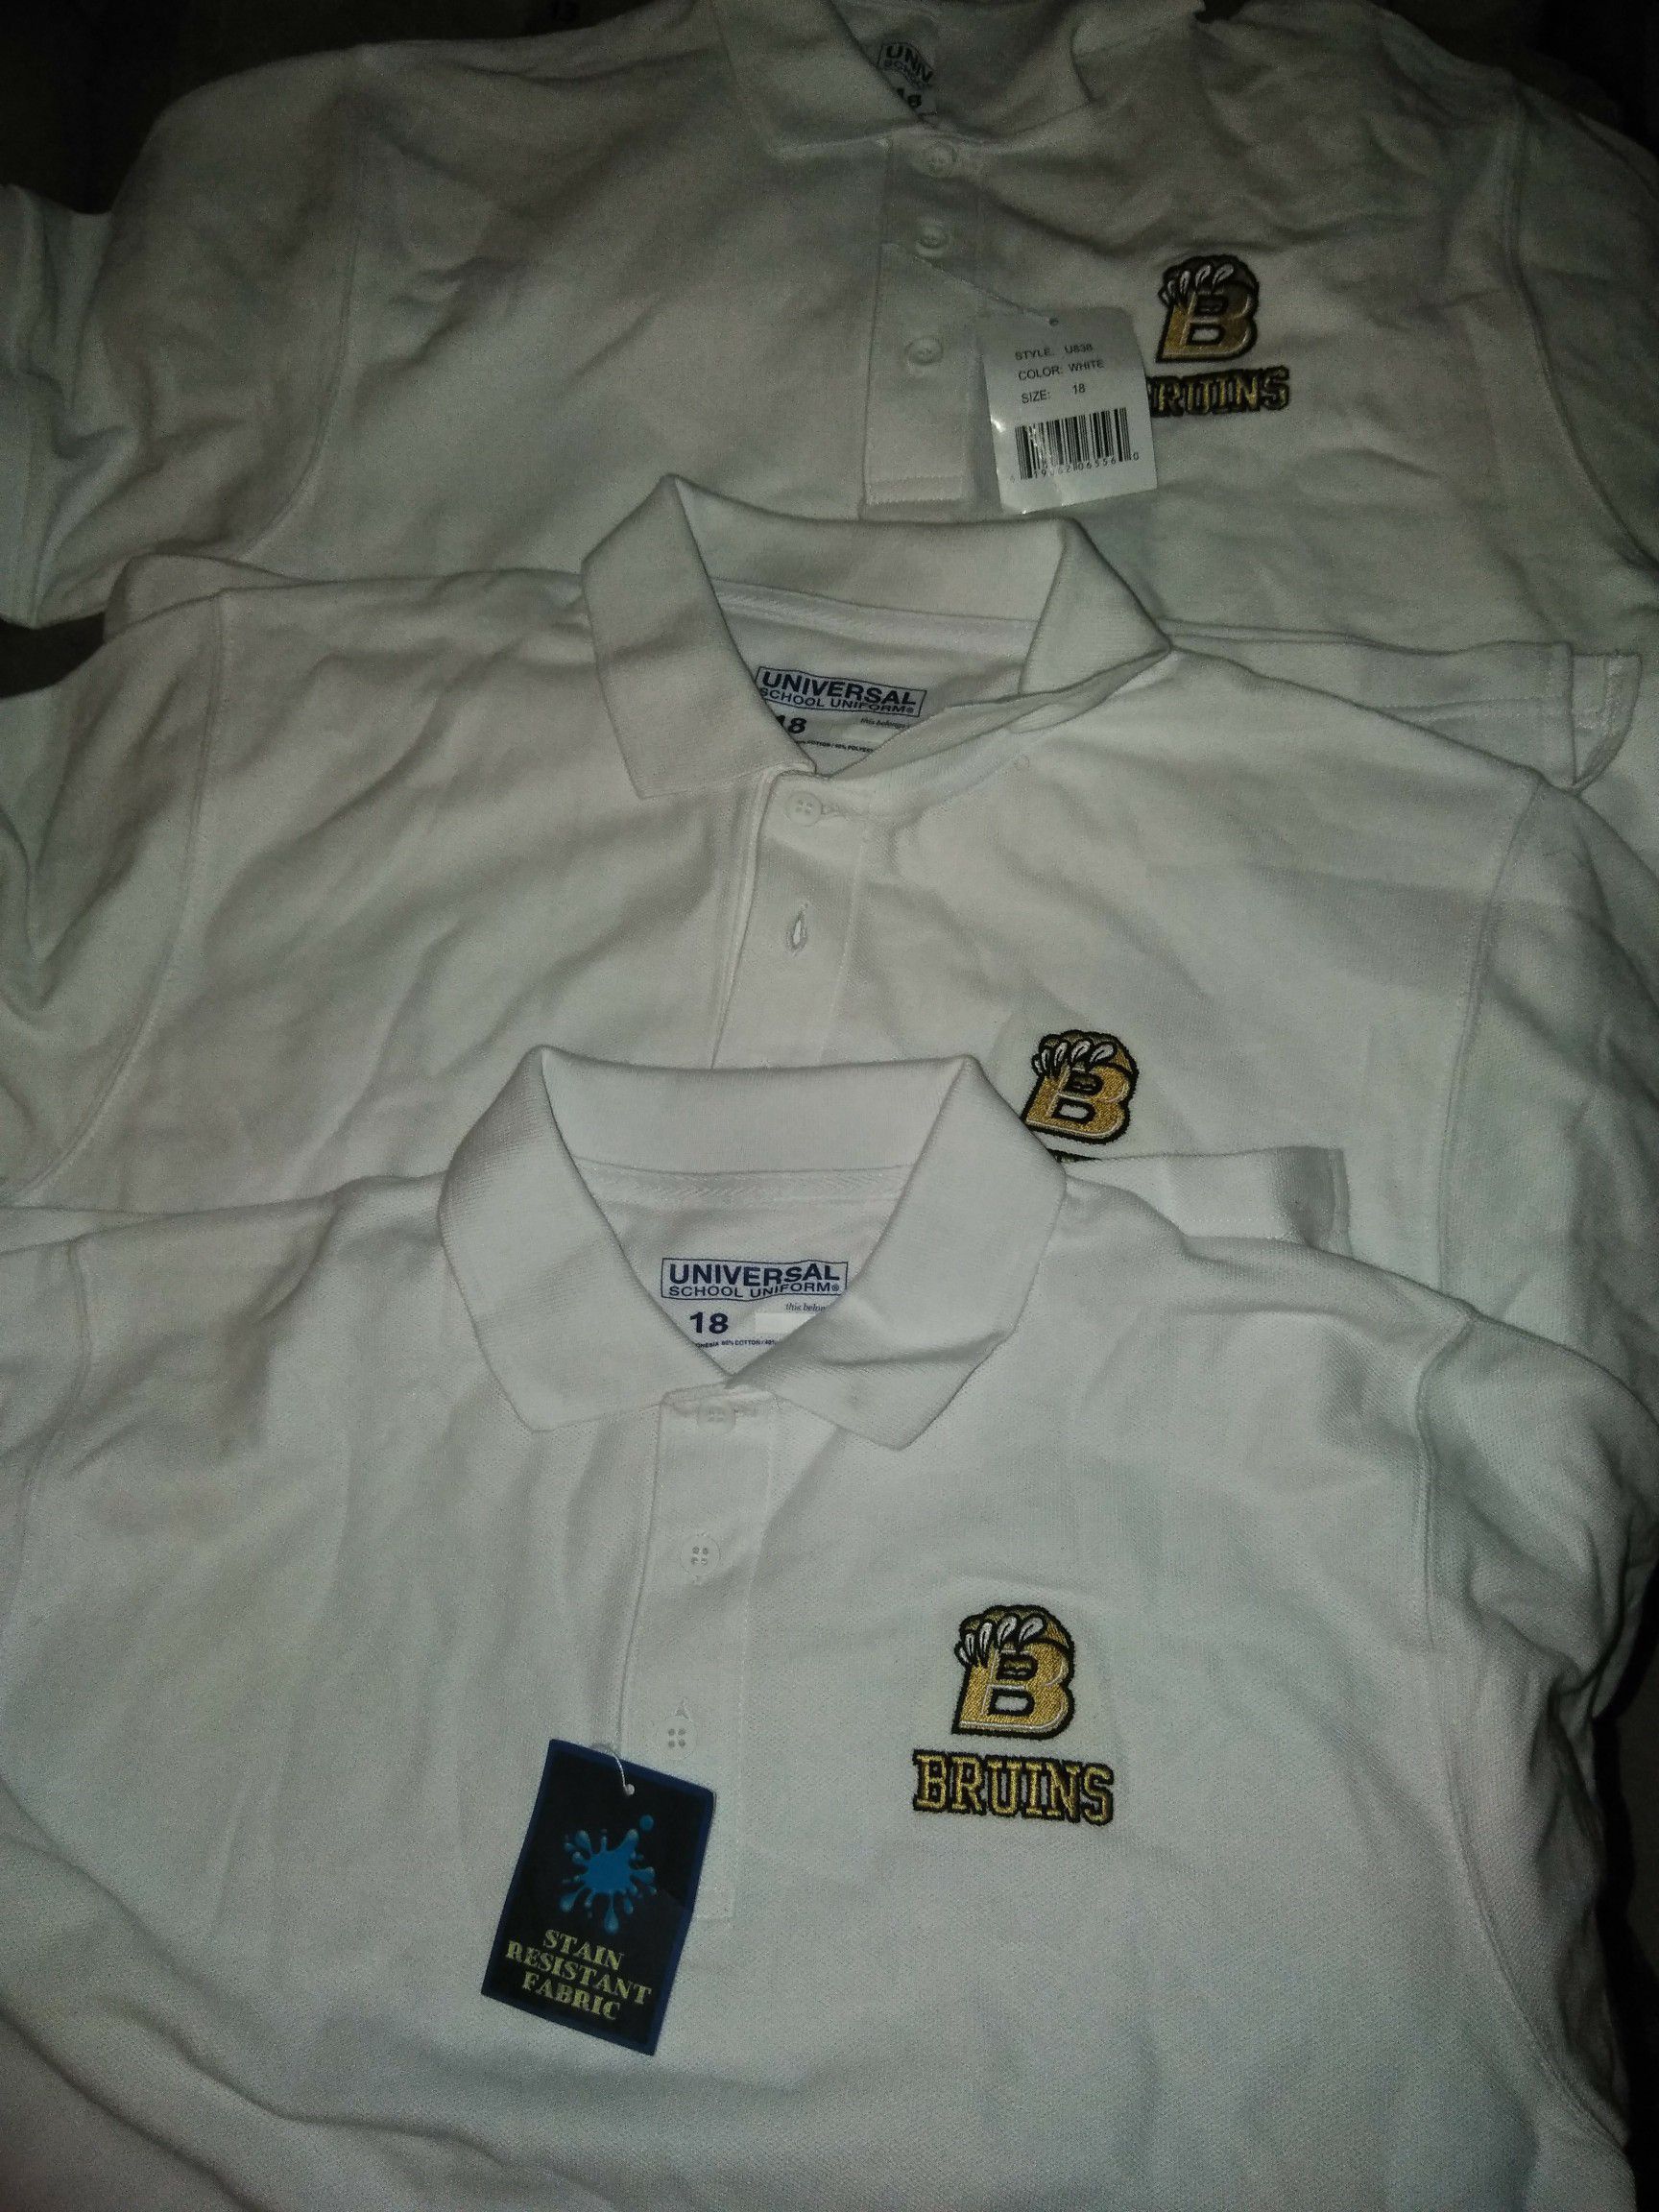 Bonnabel high school uniforms for Sale in New Orleans, LA - OfferUp